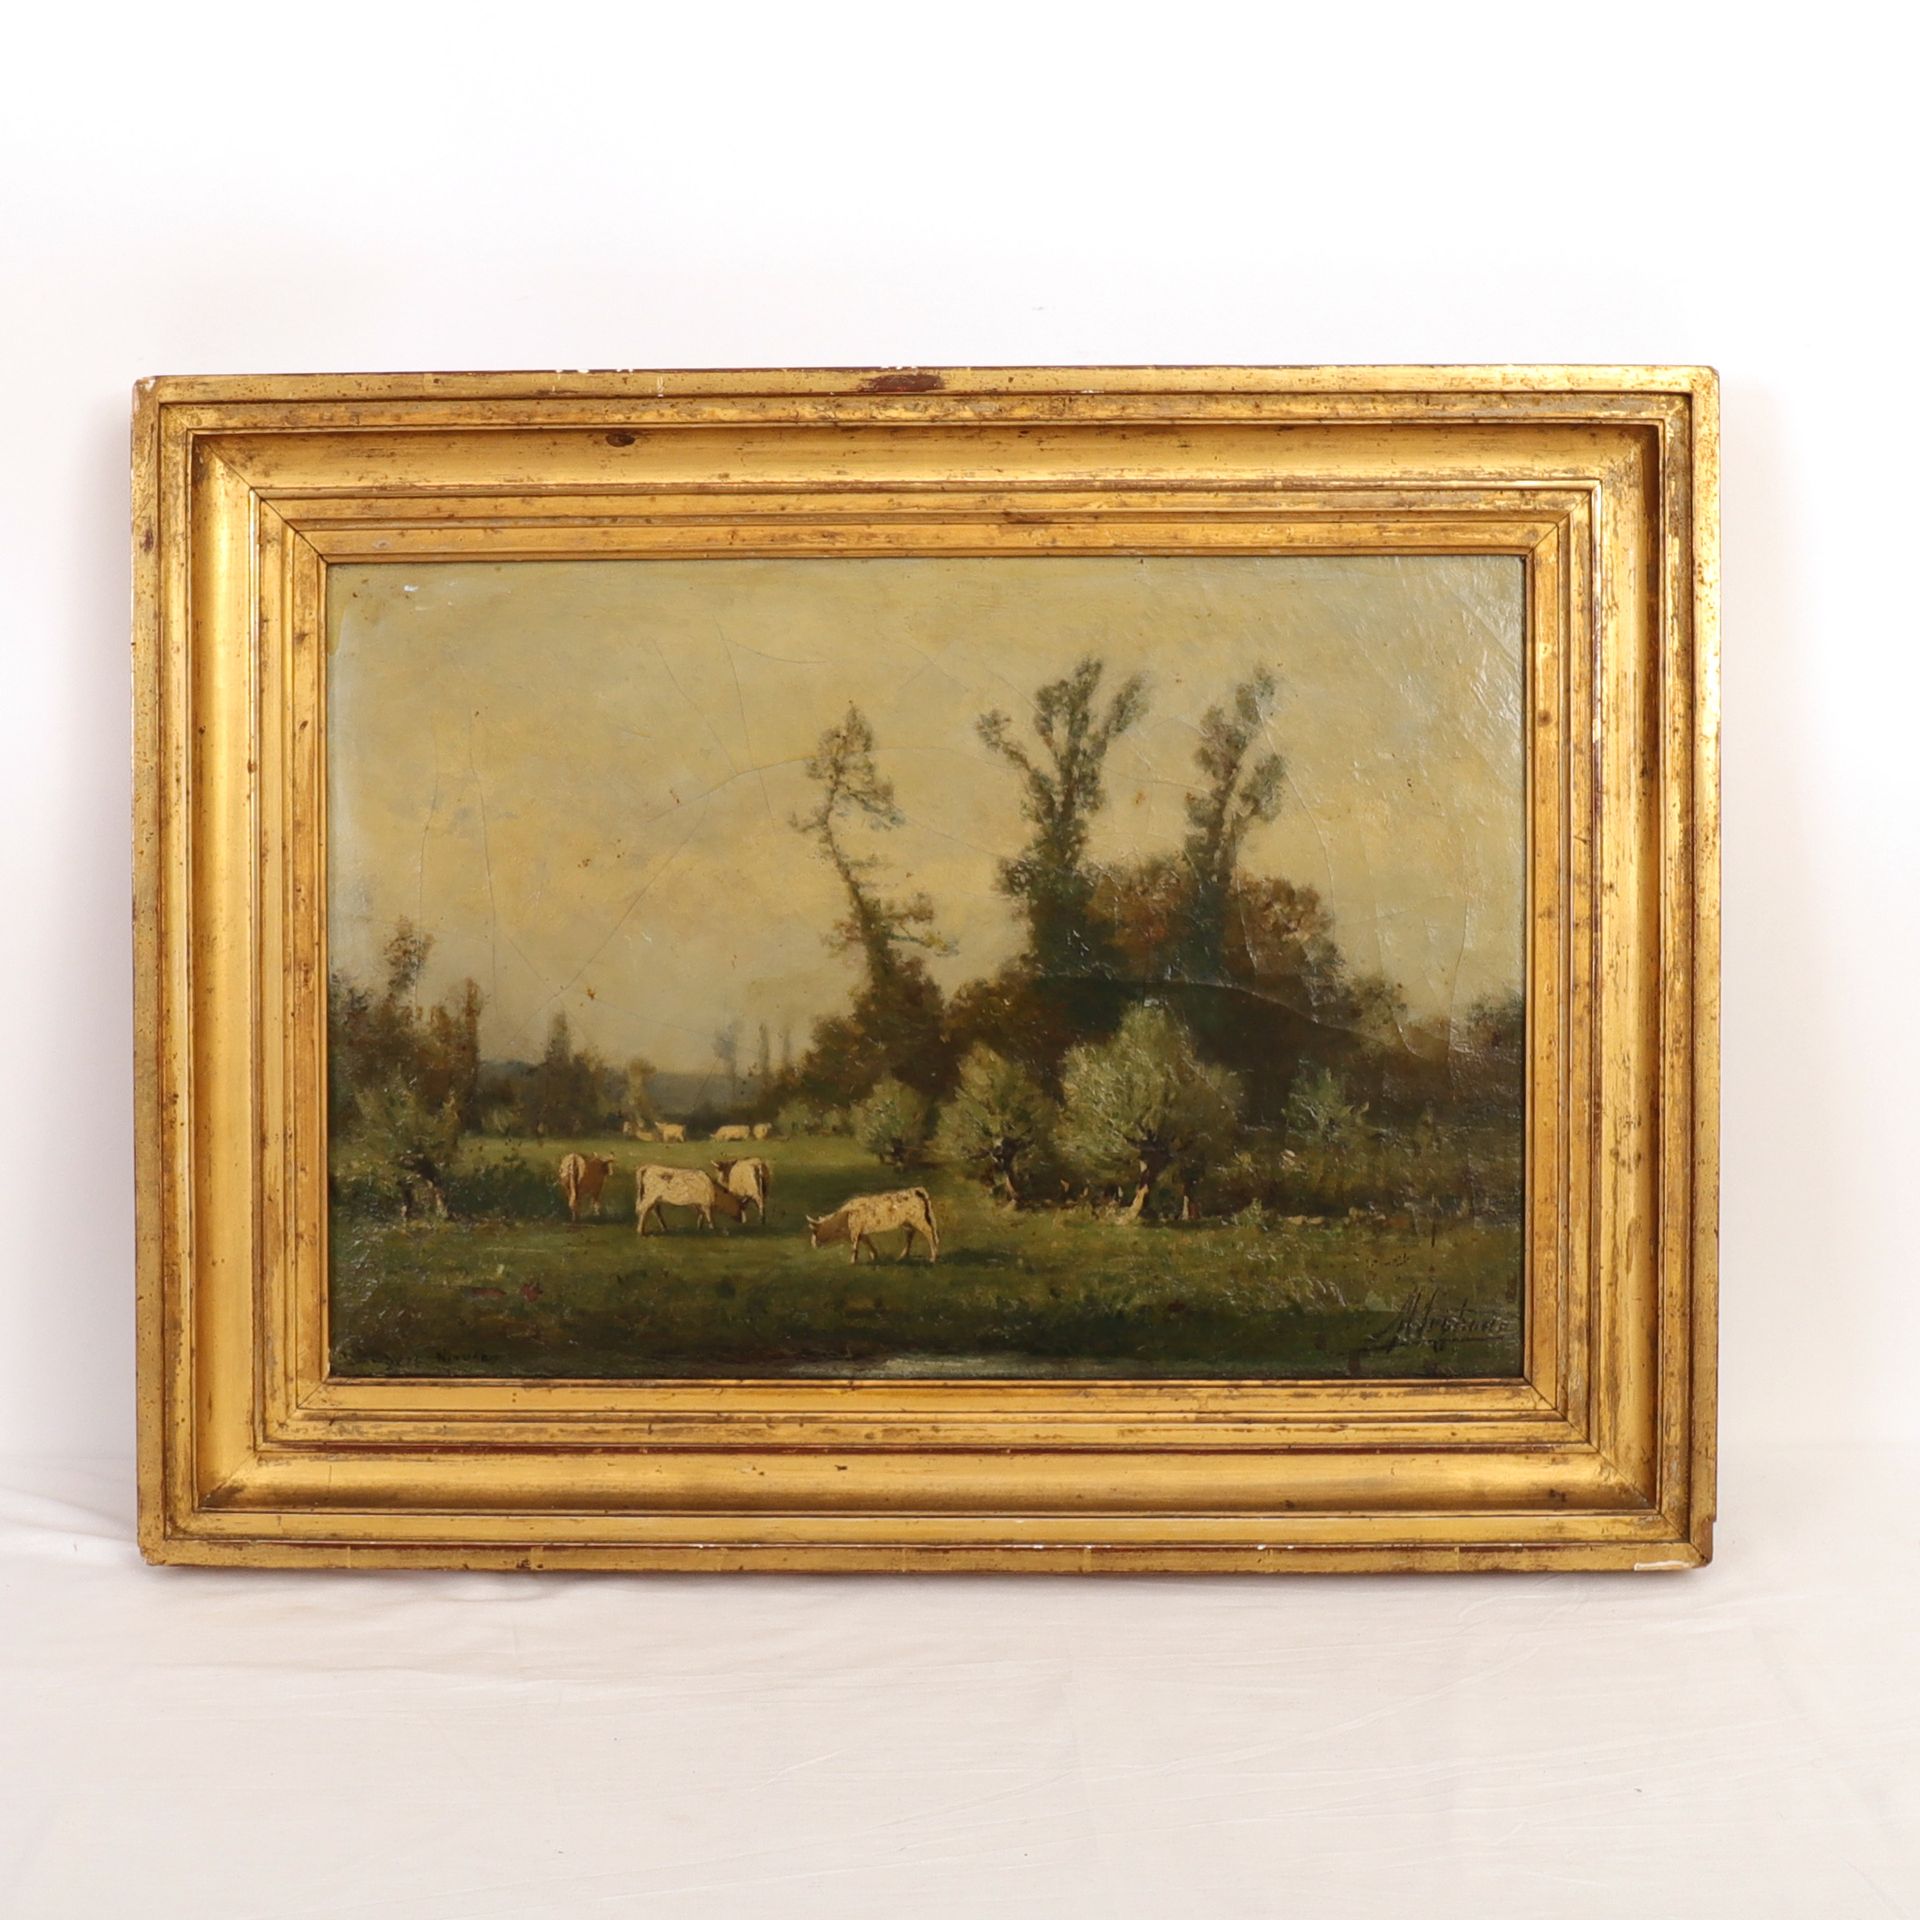 Null 画作《牧场上的奶牛》 19世纪

布面油画，带框。

右下方有签名Hilghovia (?)，左下方有定位 "Dorgon - Nièvre"。

1&hellip;